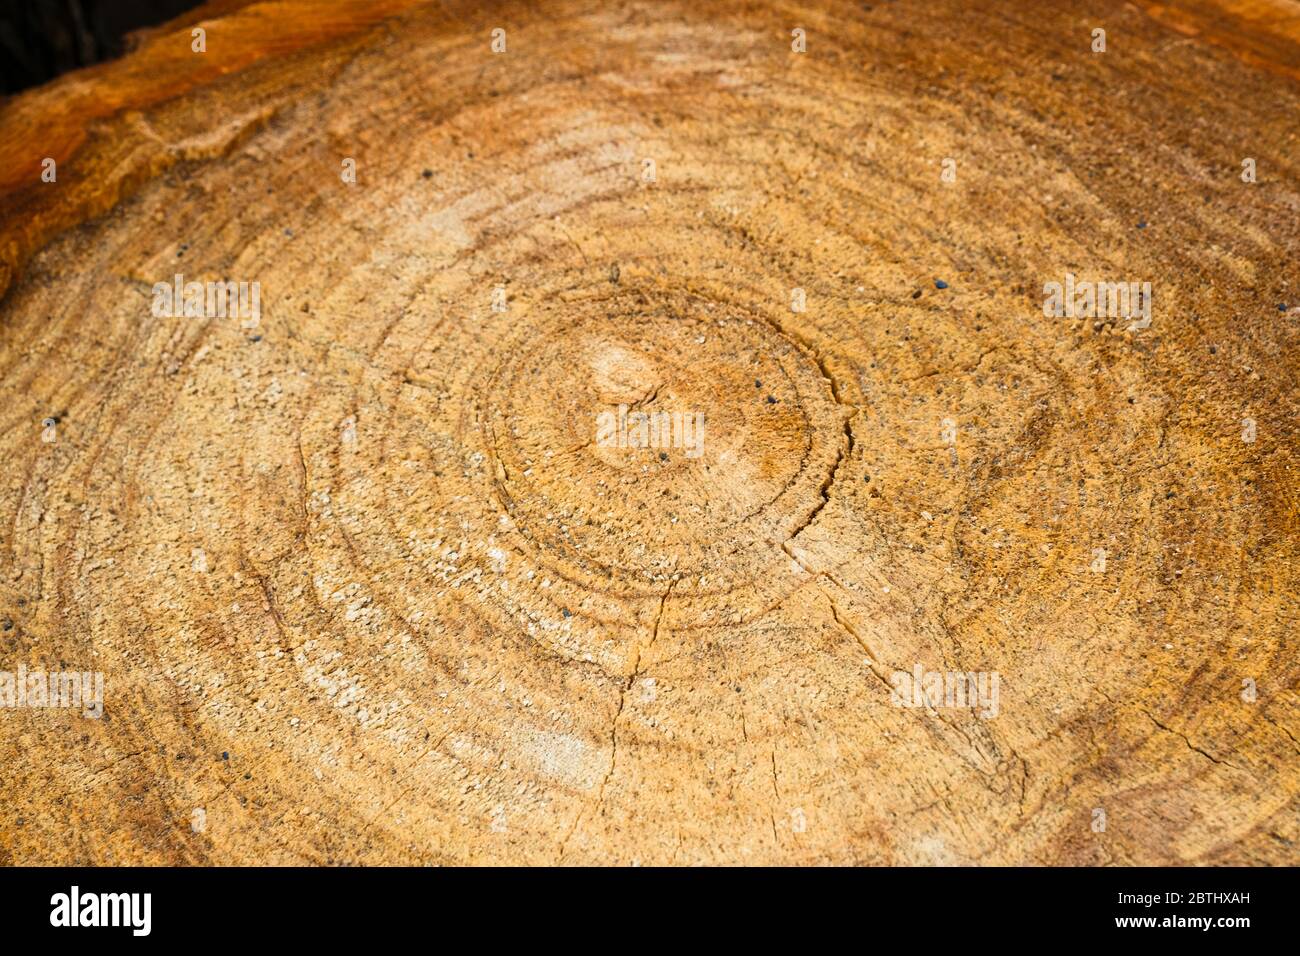 Textura natural de madera de tronco de árbol cortado. Estructura de corte de madera de primer plano. Sauce. Venta. Enfoque selectivo Foto de stock